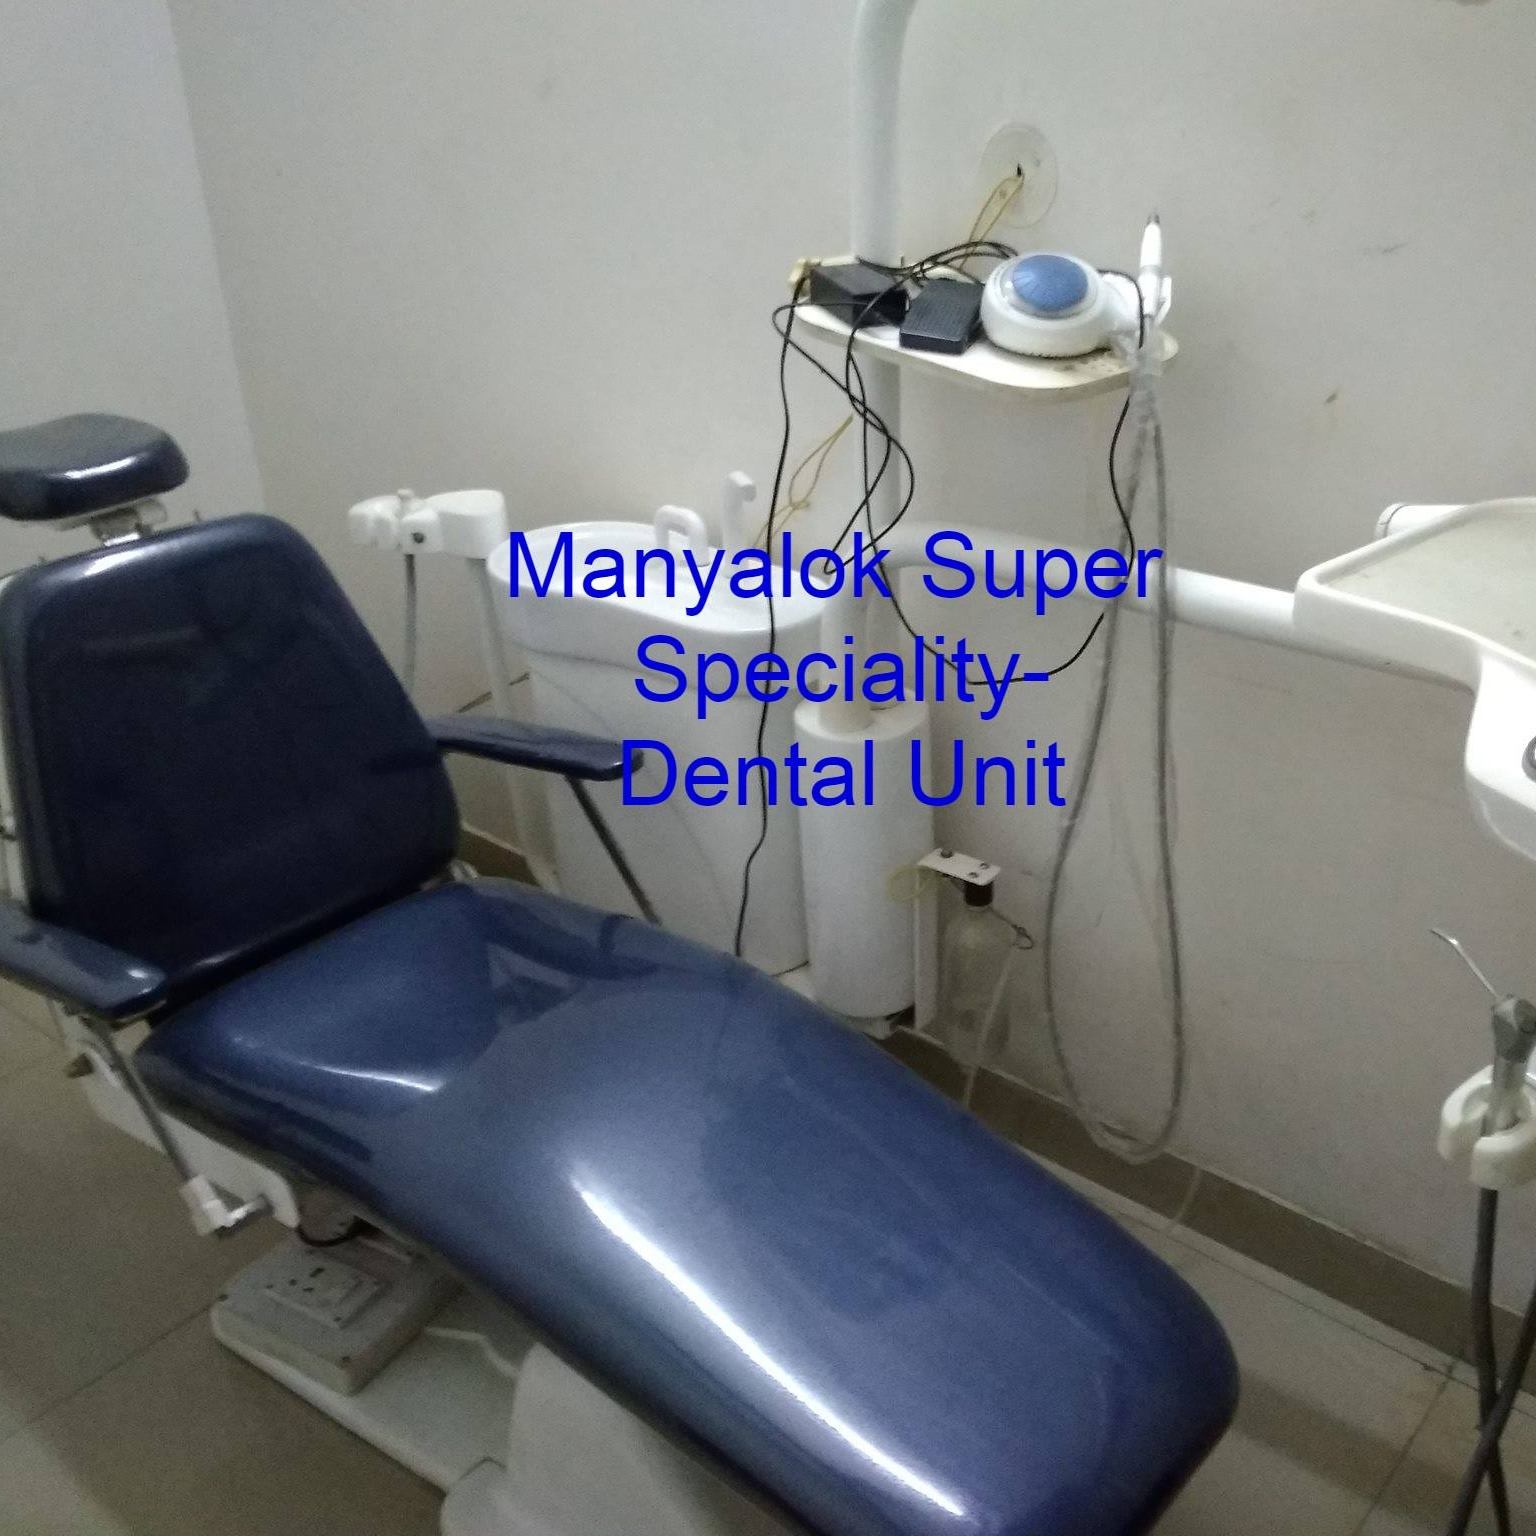 Manyalok Superspeciality - Orthodontics Implant & Pediatric Dentistry|Veterinary|Medical Services